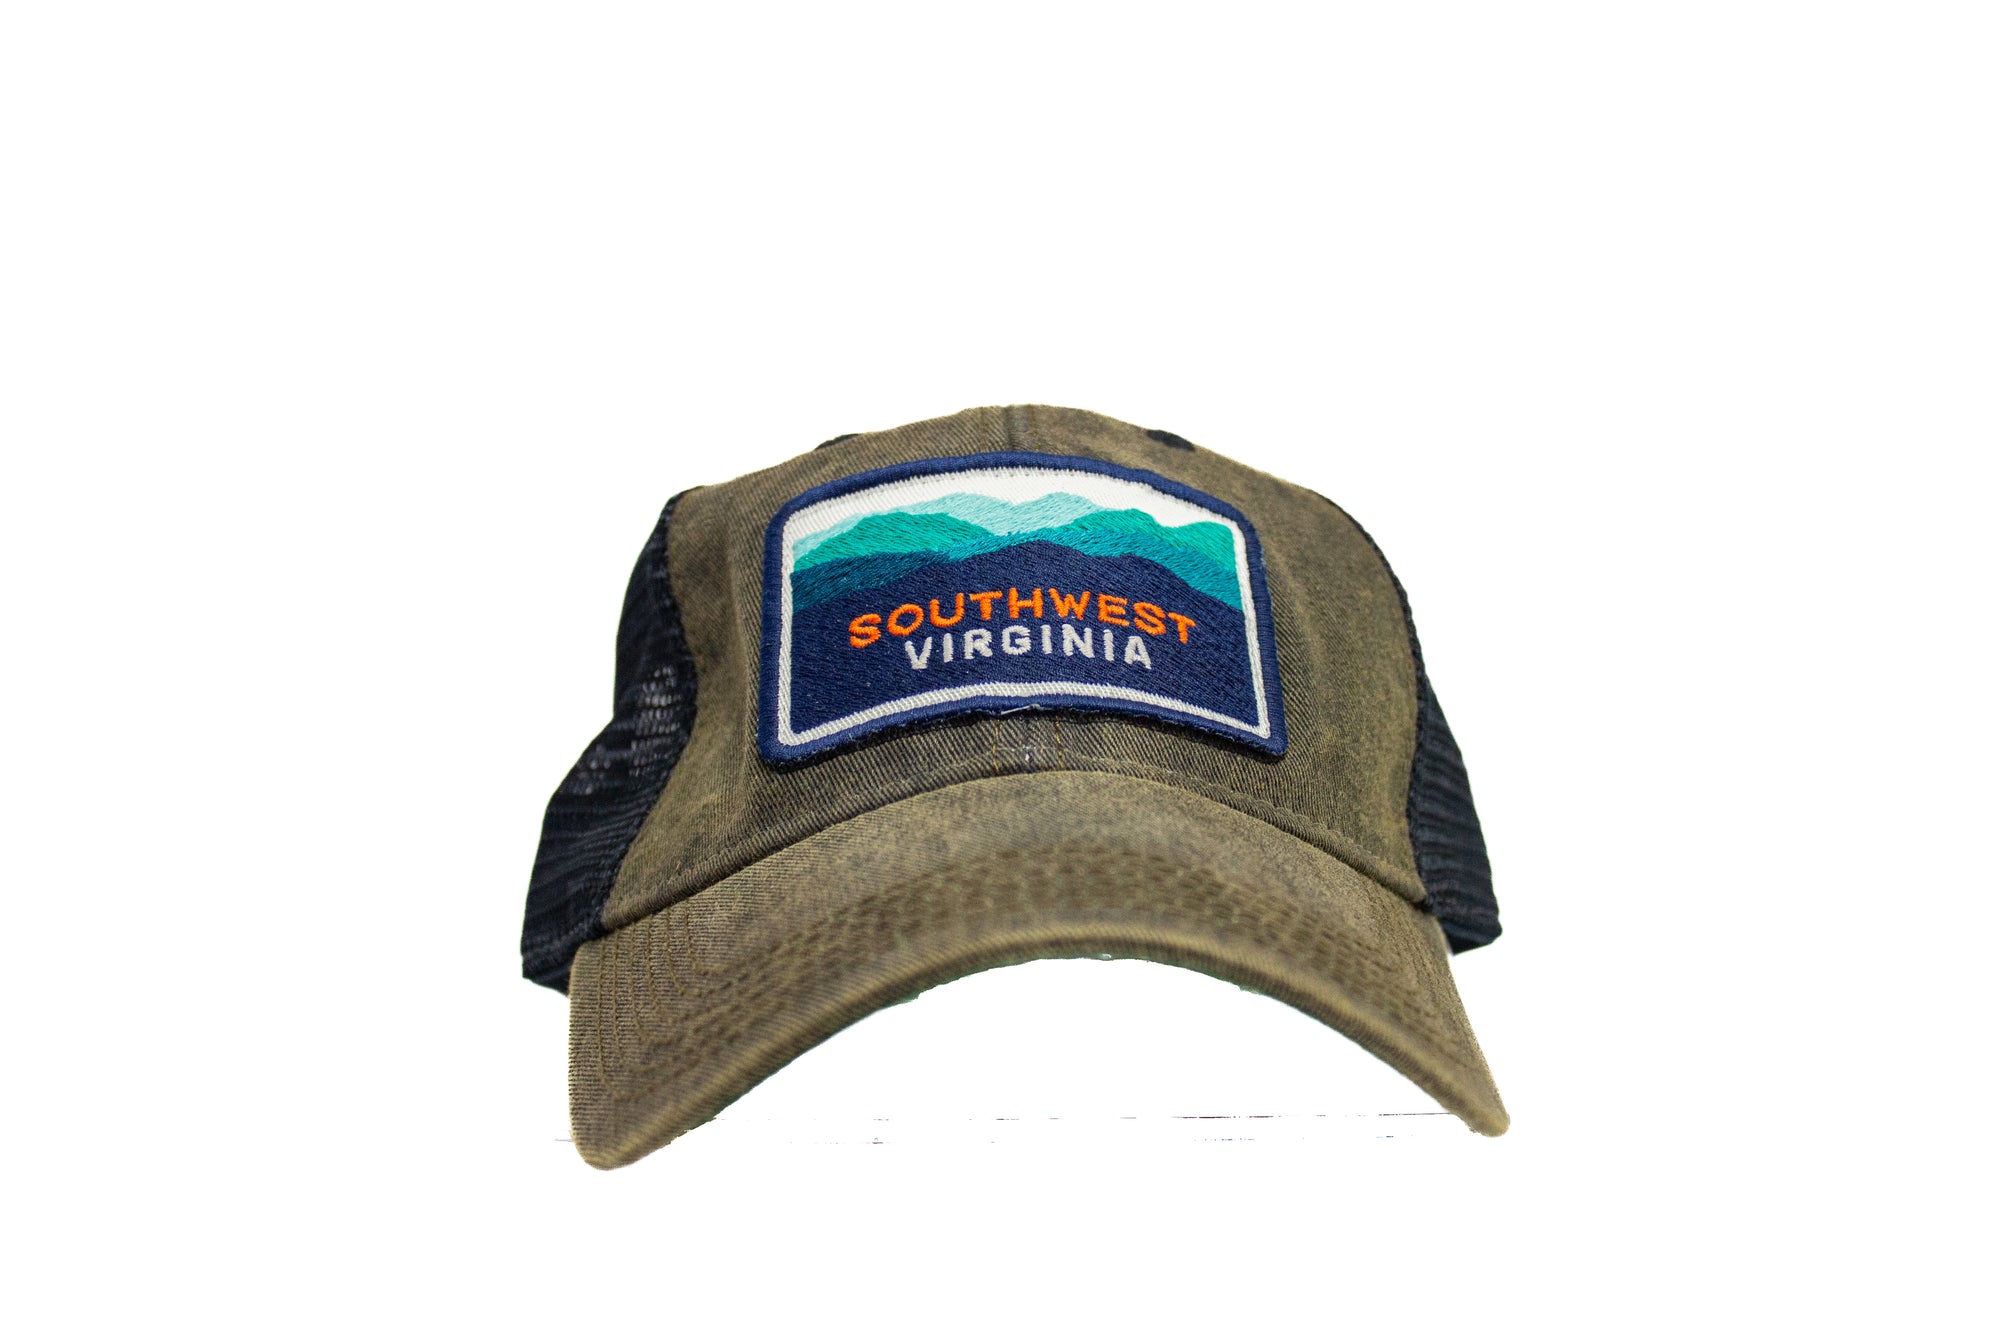 SWVA Mountain Vintage Trucker Hat